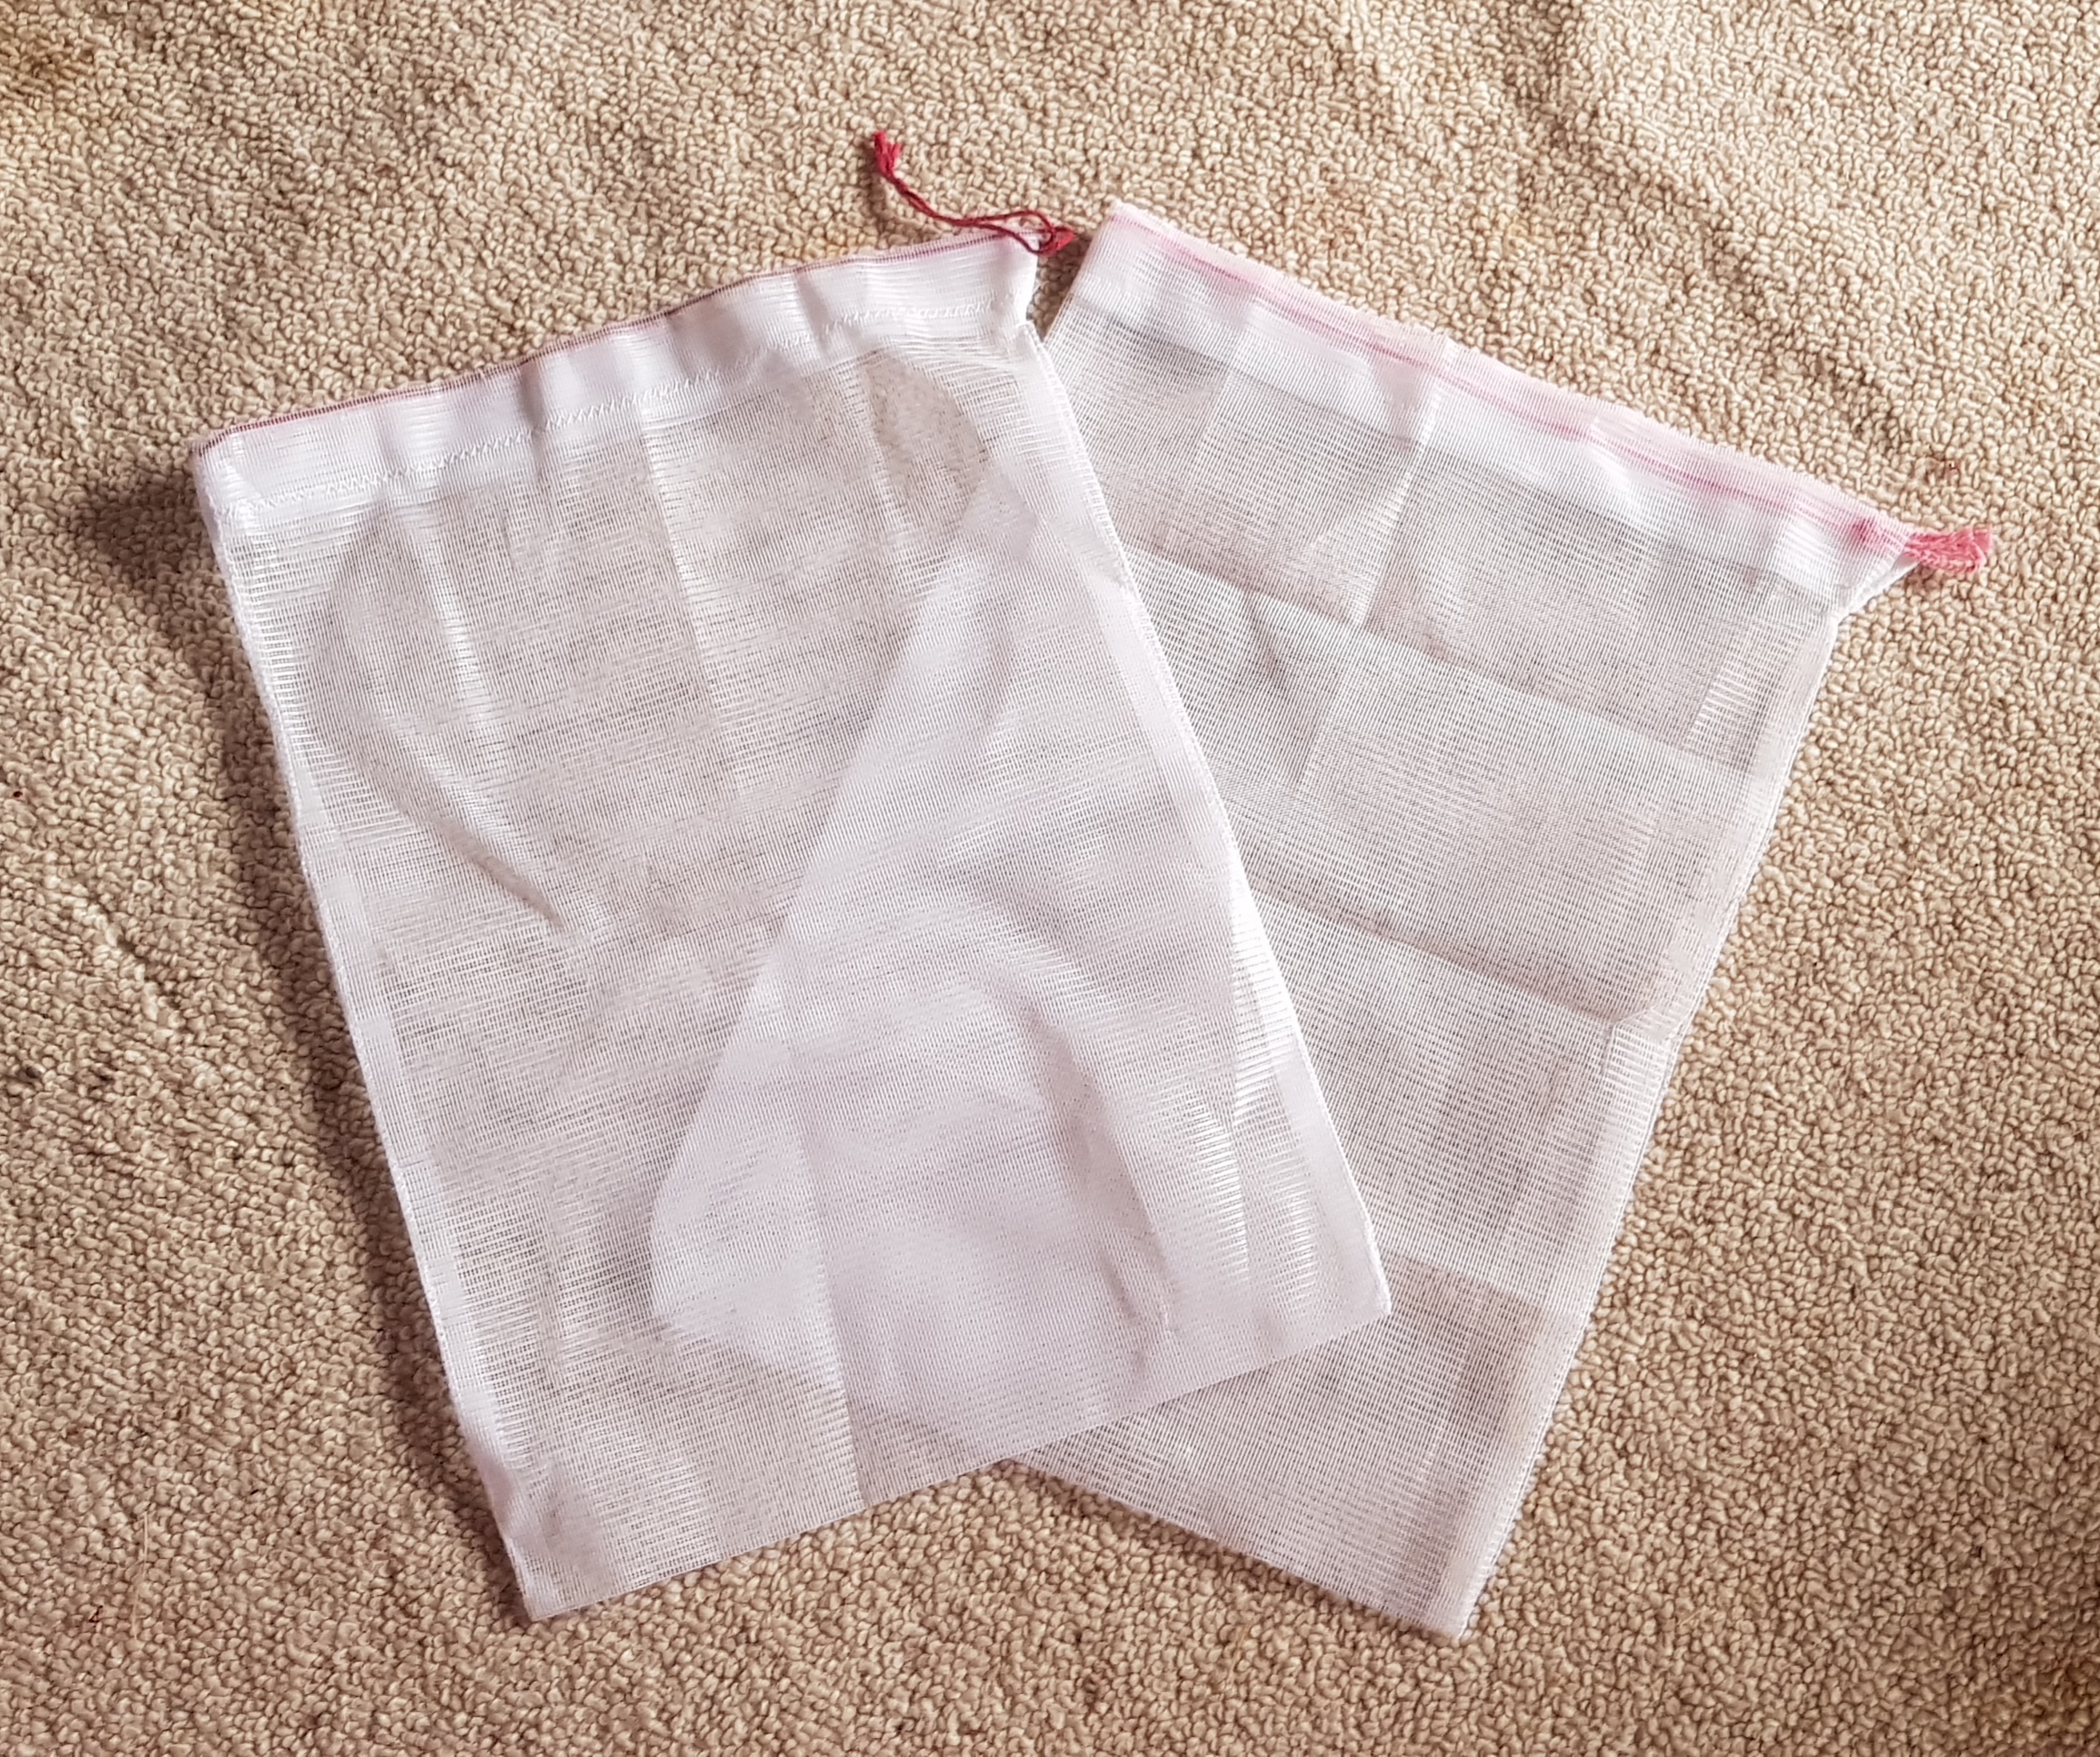 image of two white drawstring bags.